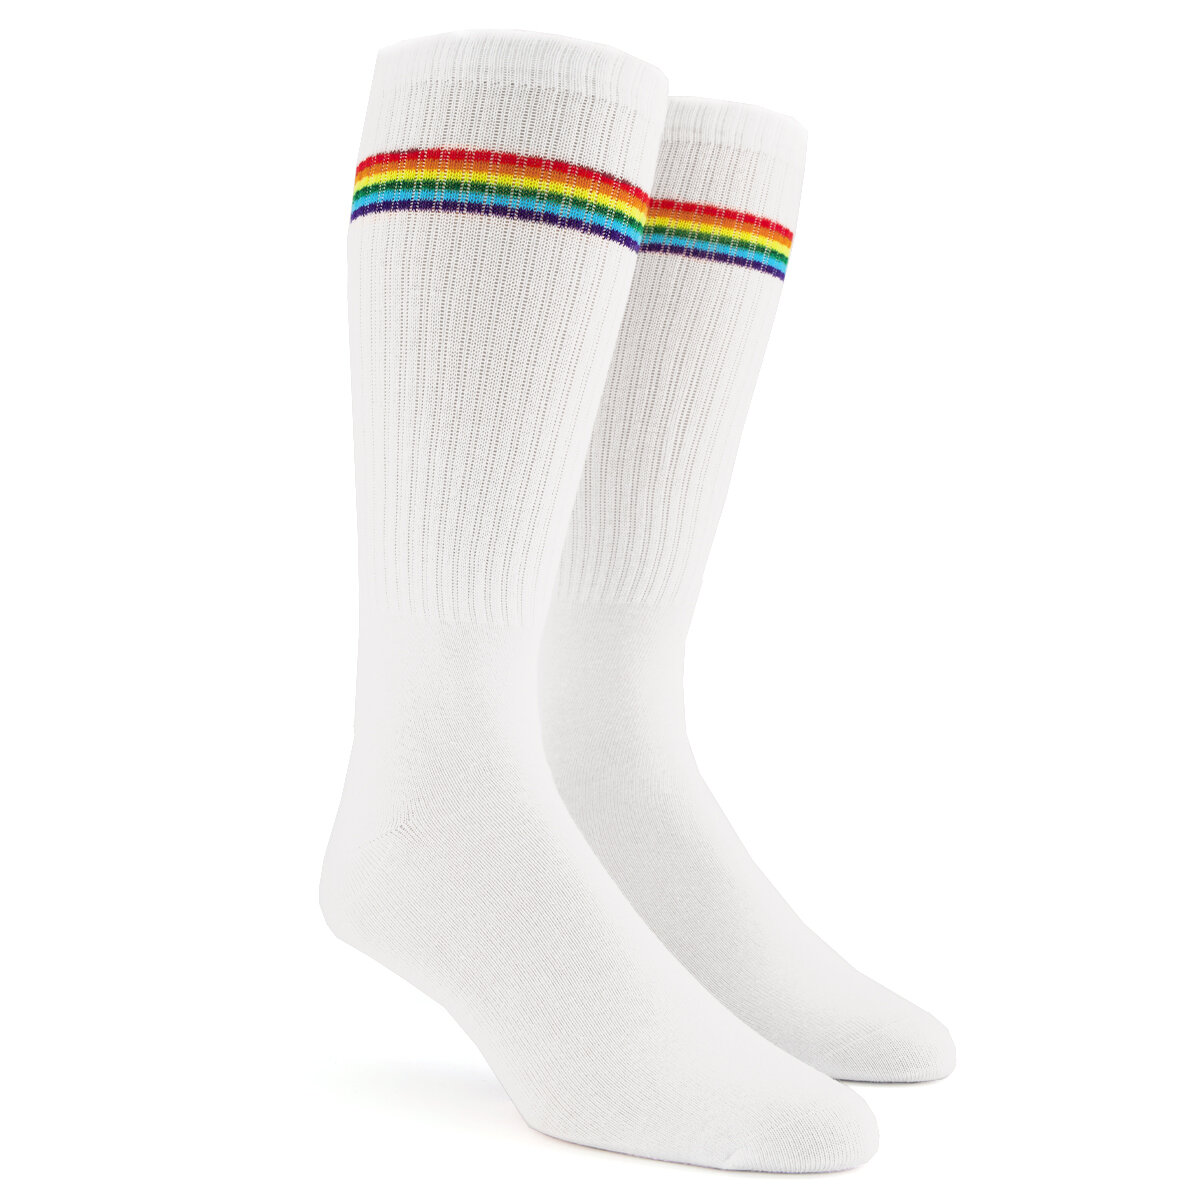 The Rainbow Crew Socks